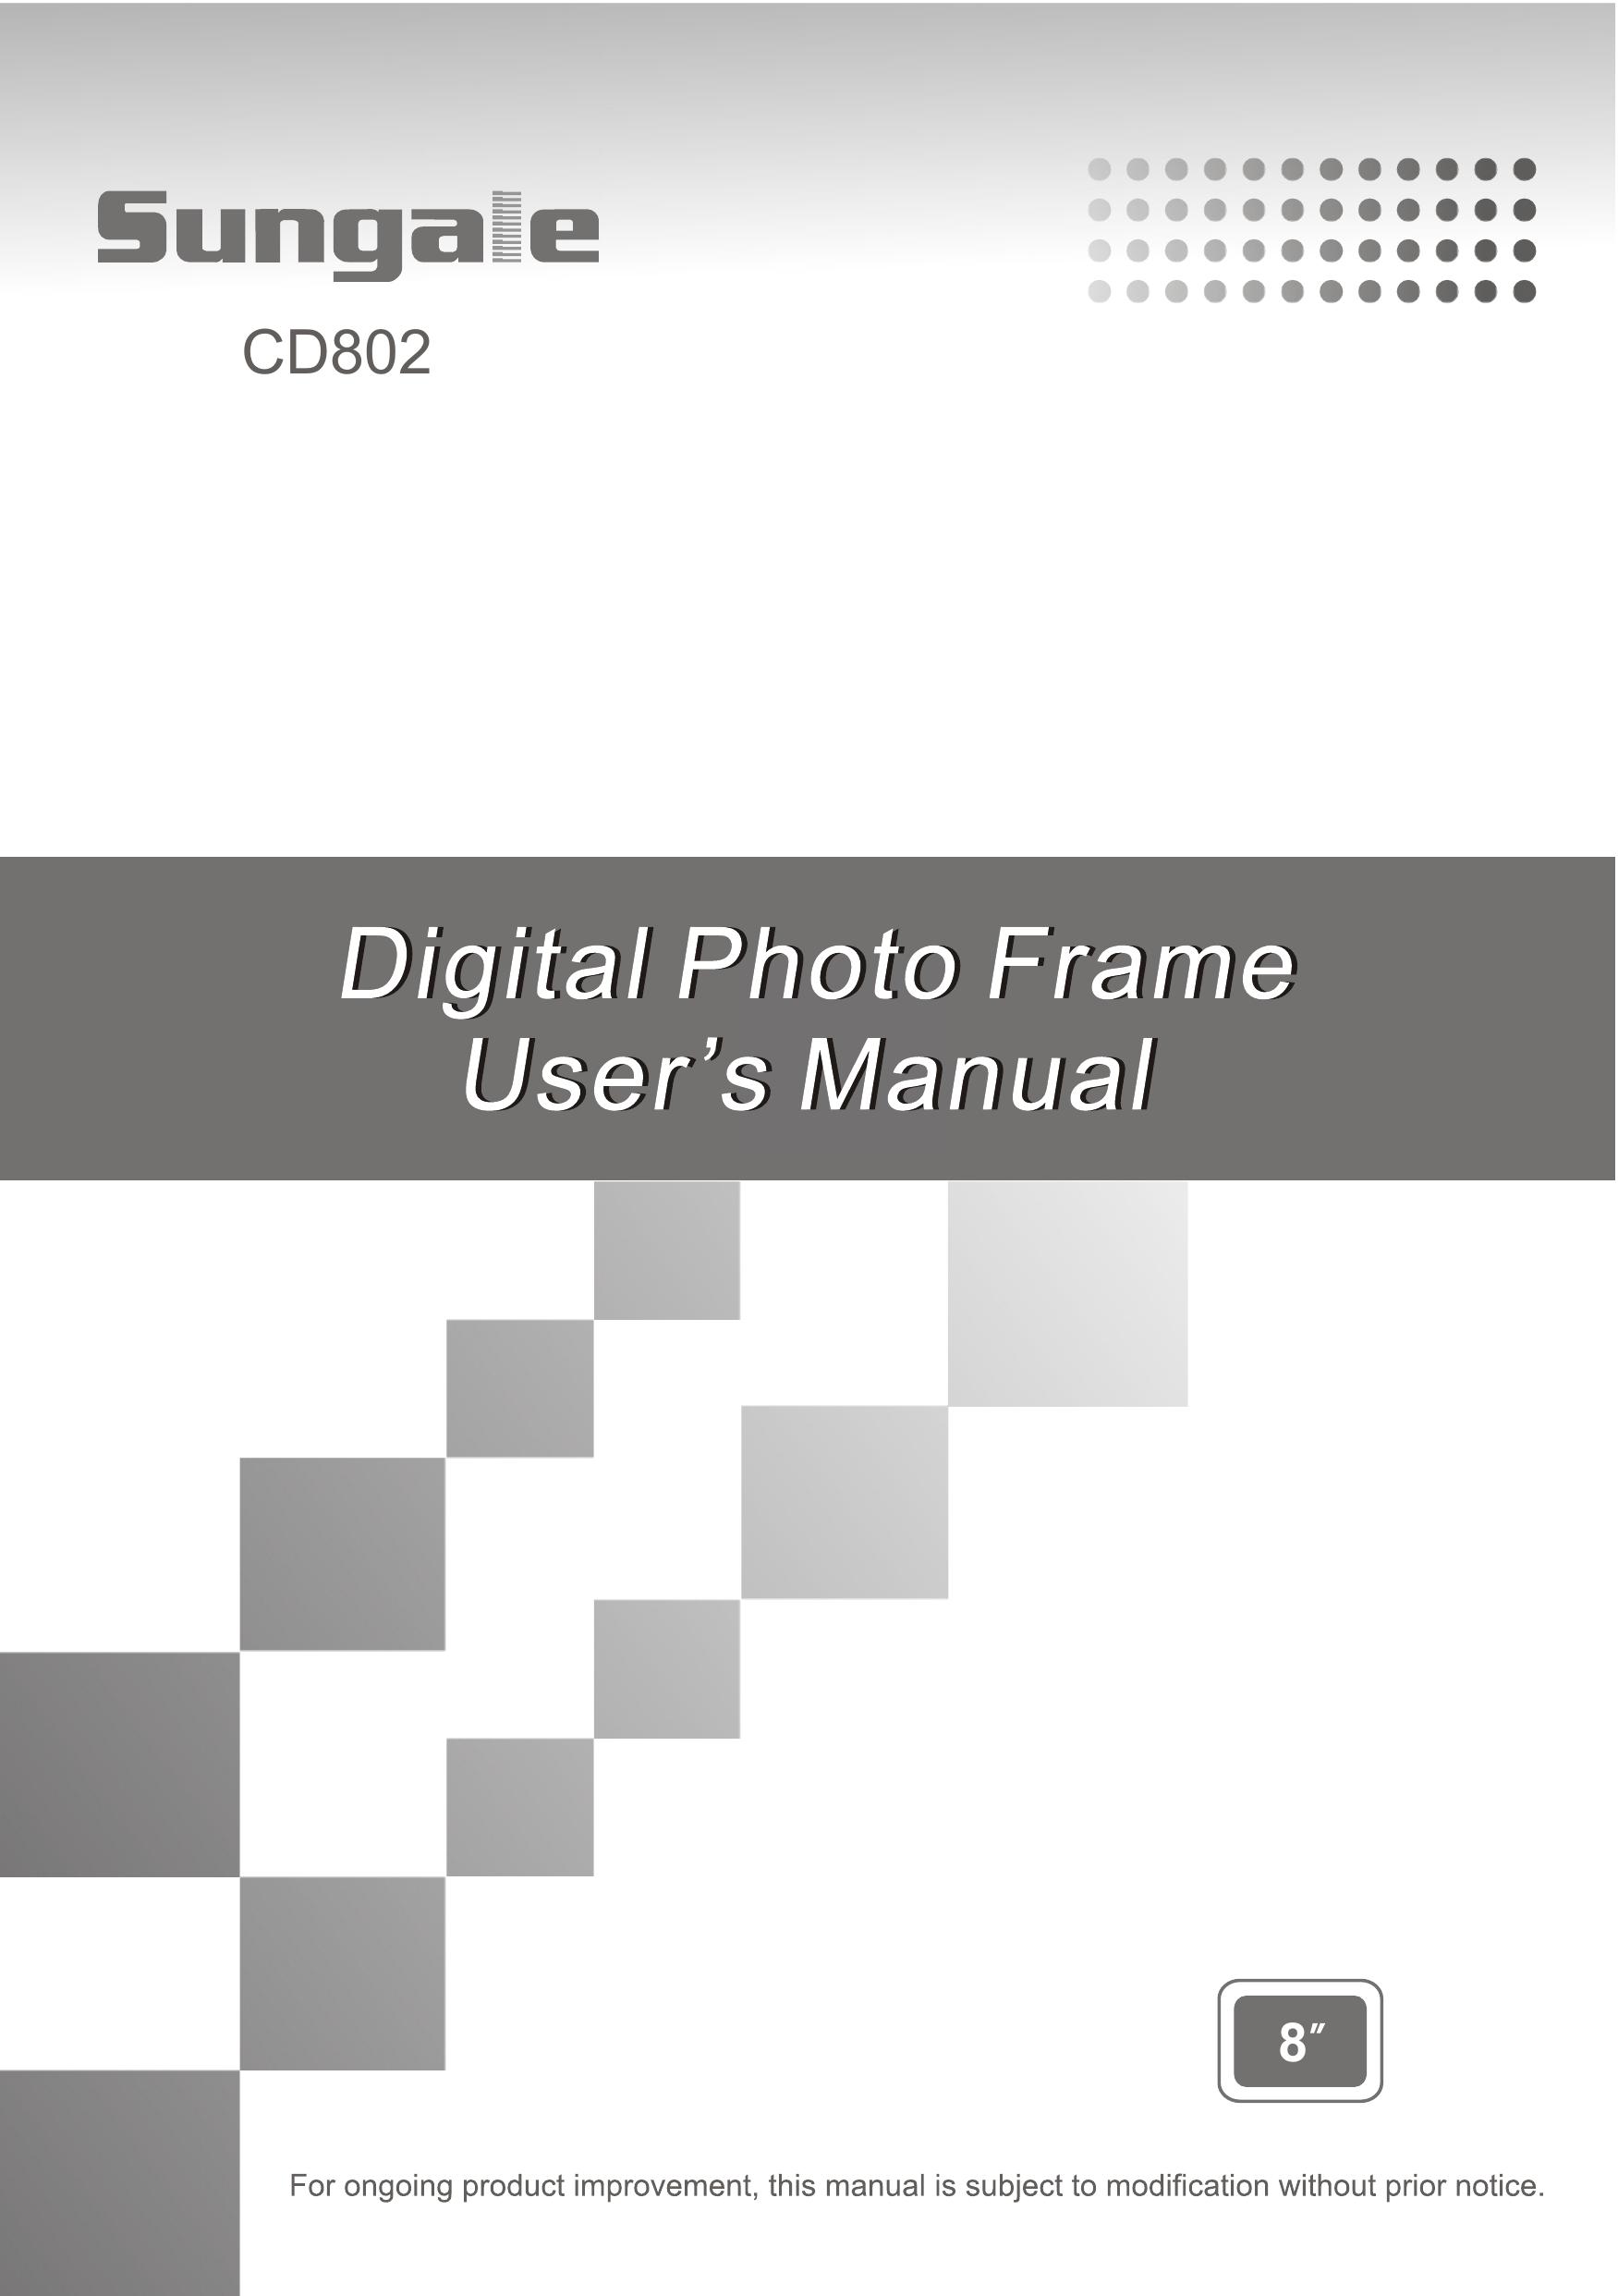 Sungale CD802 Digital Photo Frame User Manual